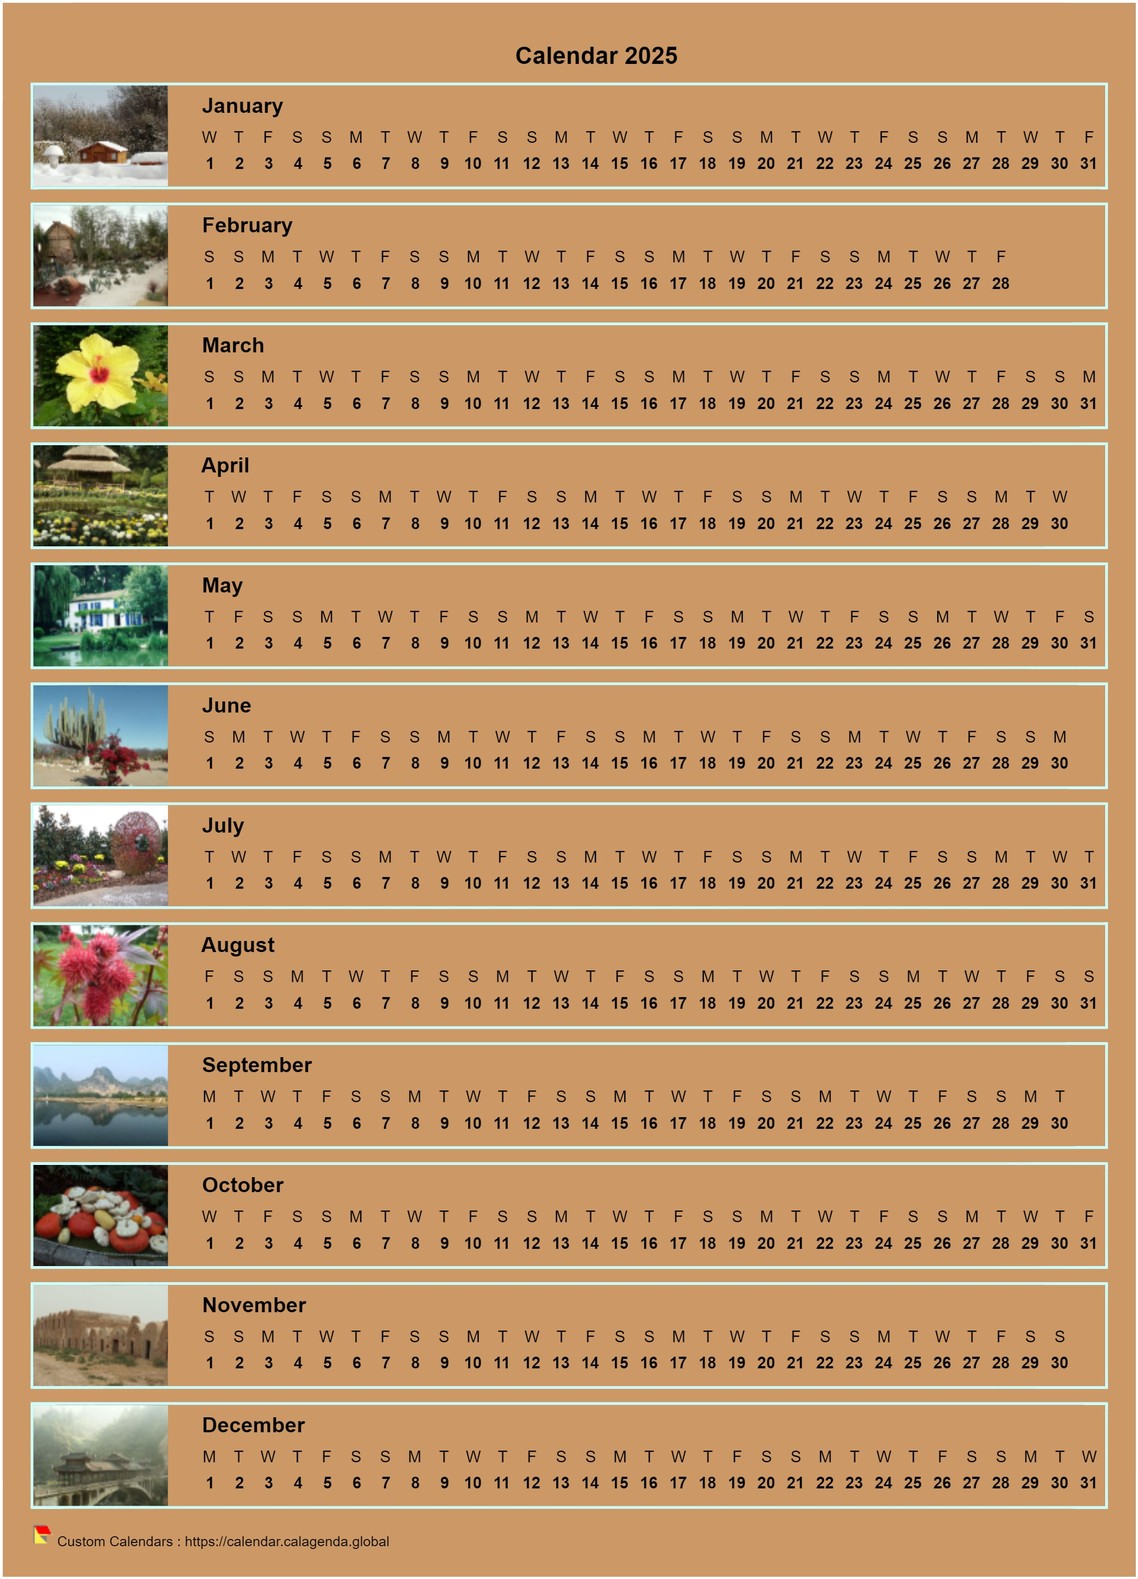 Calendar 2025 annual horizontal with 12 photos